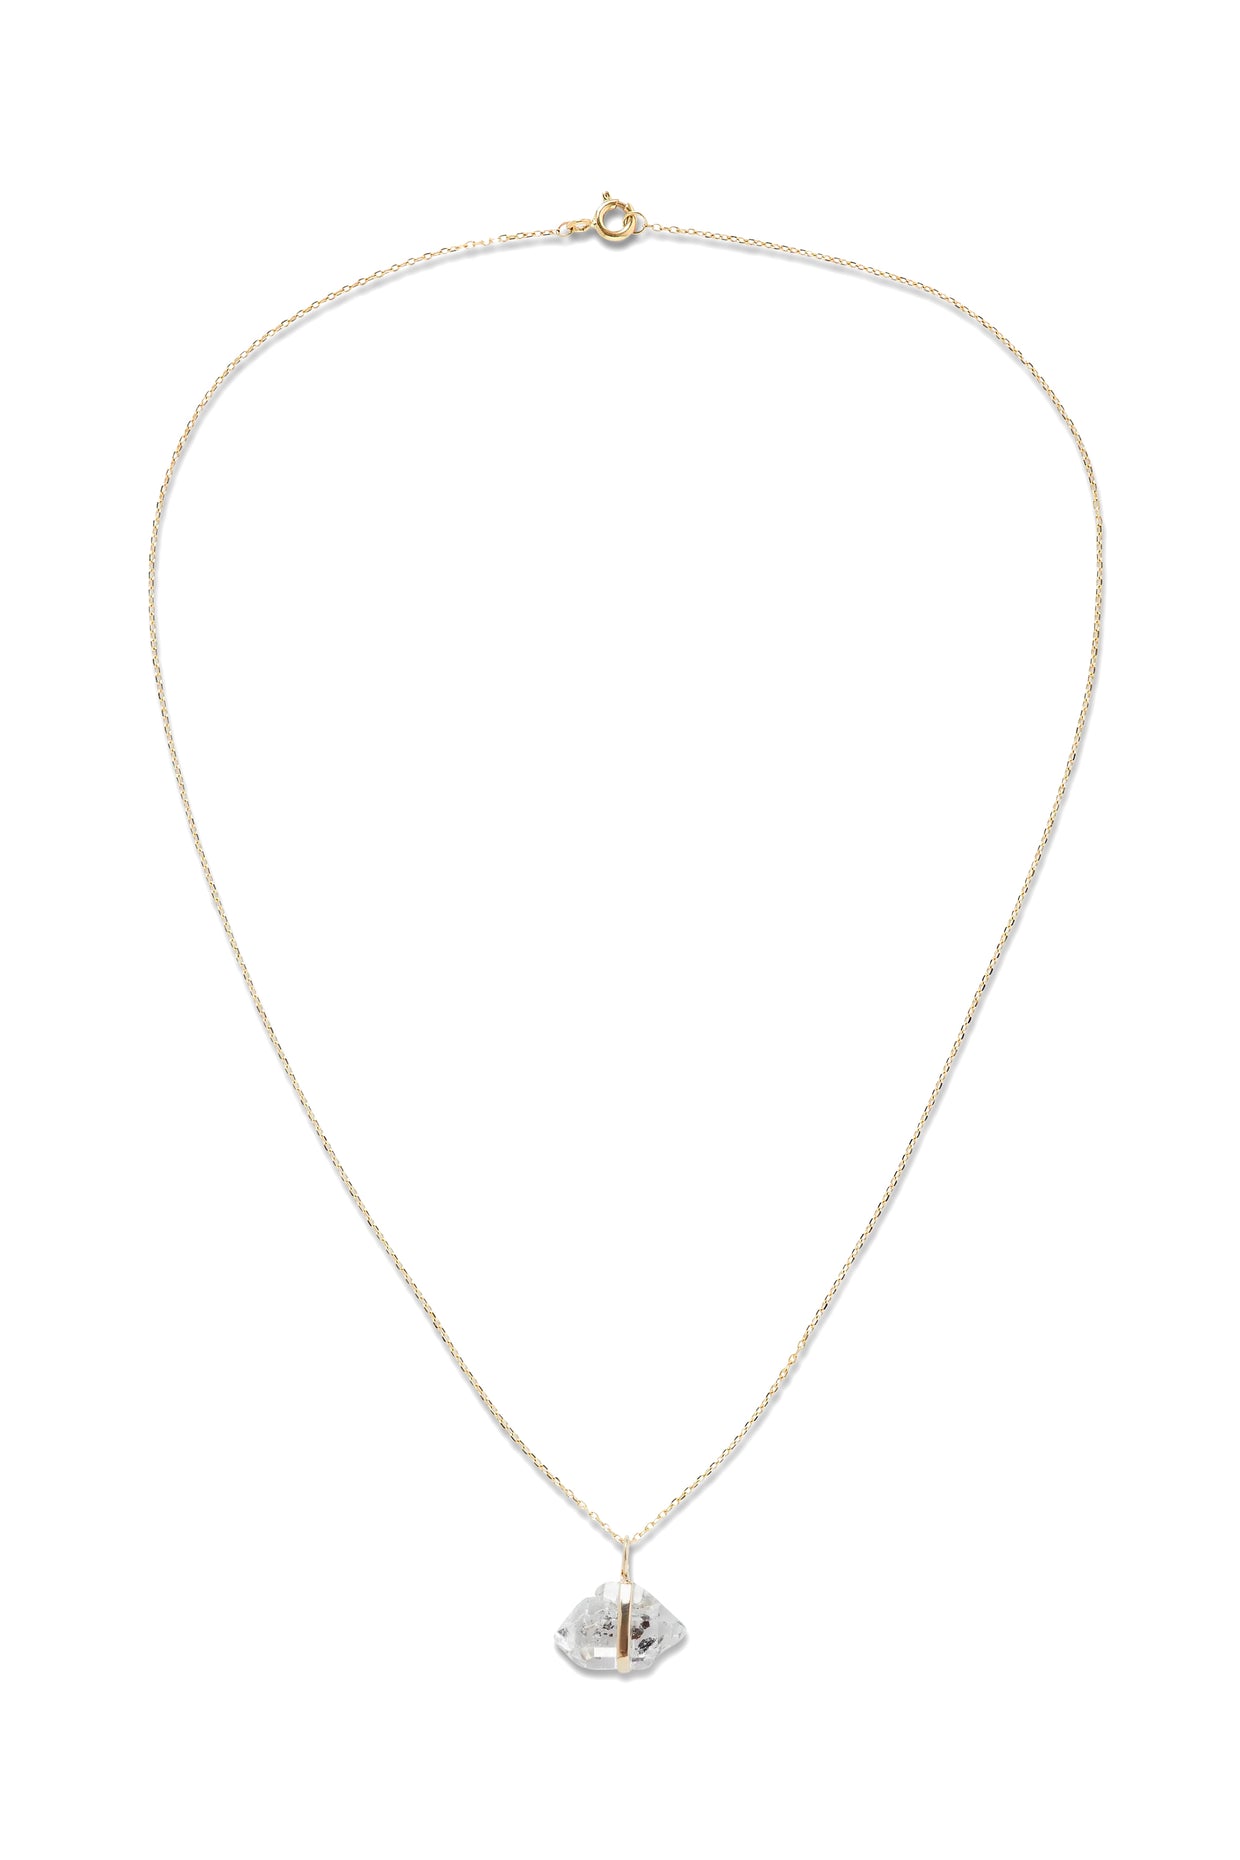 April Birthstone Herkimer Diamond Necklace